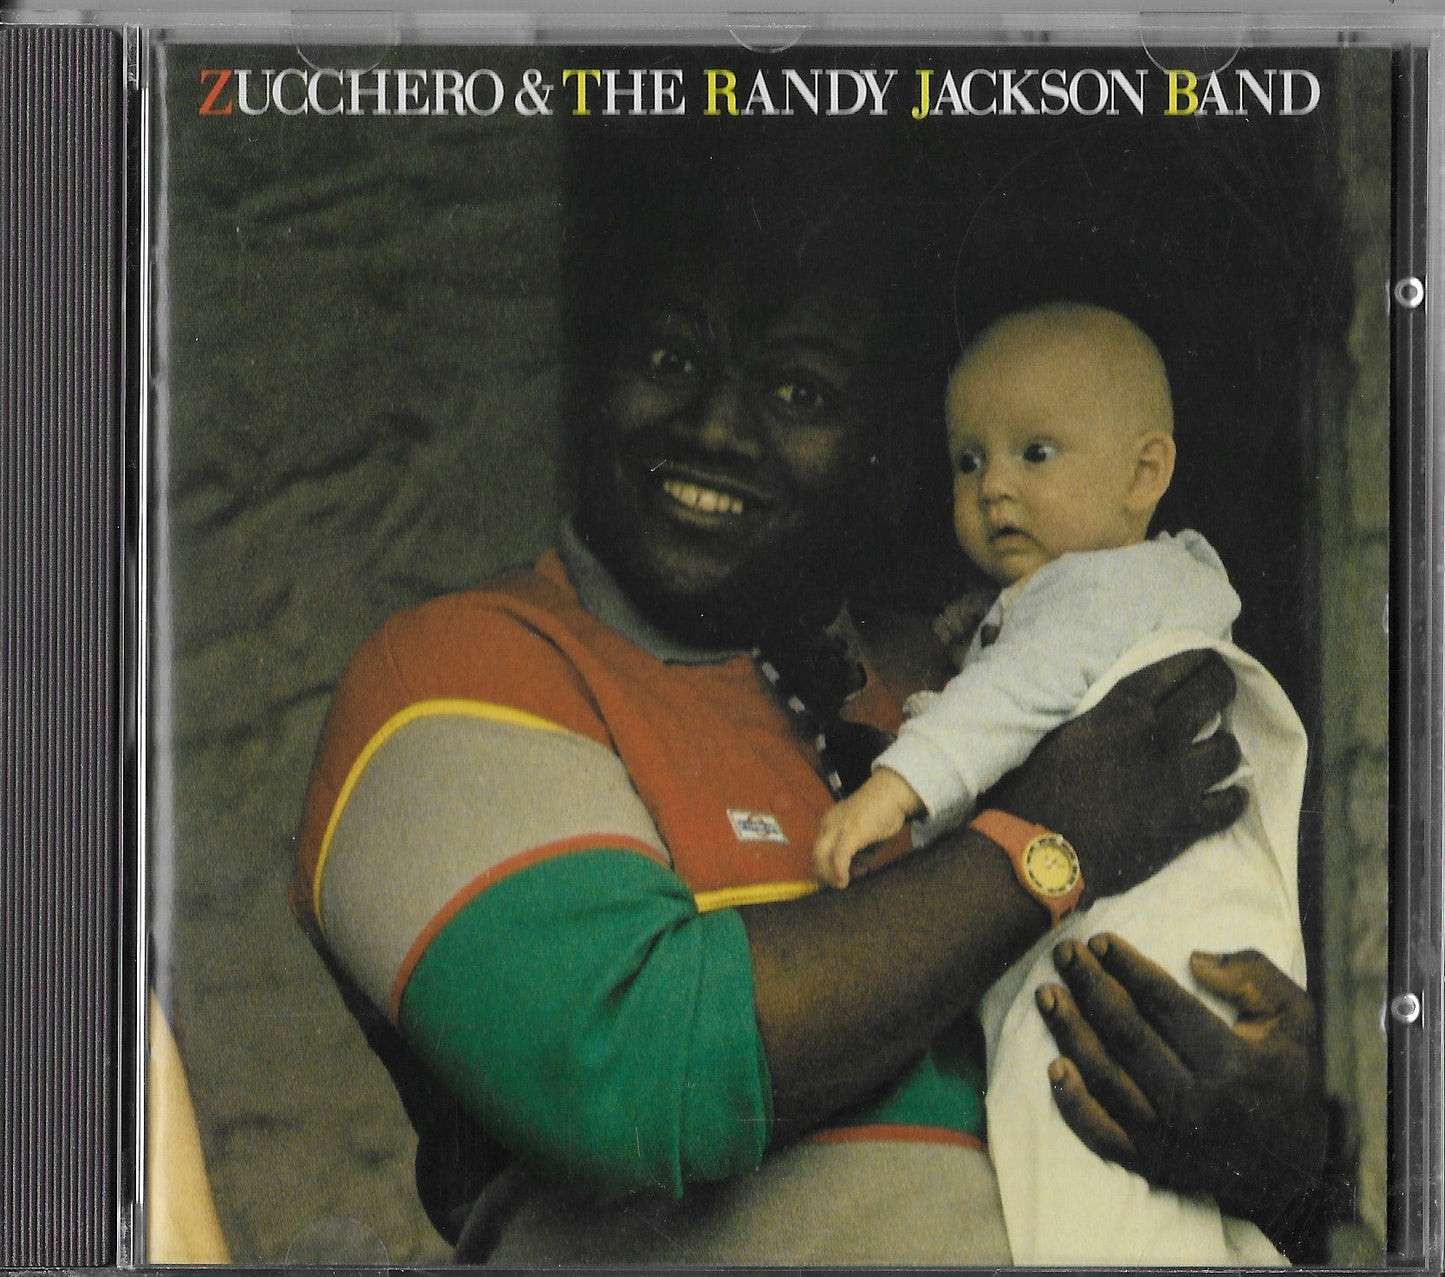 ZUCCHERO & THE RANDY JACKSON BAND - Zucchero & The Randy Jackson Band